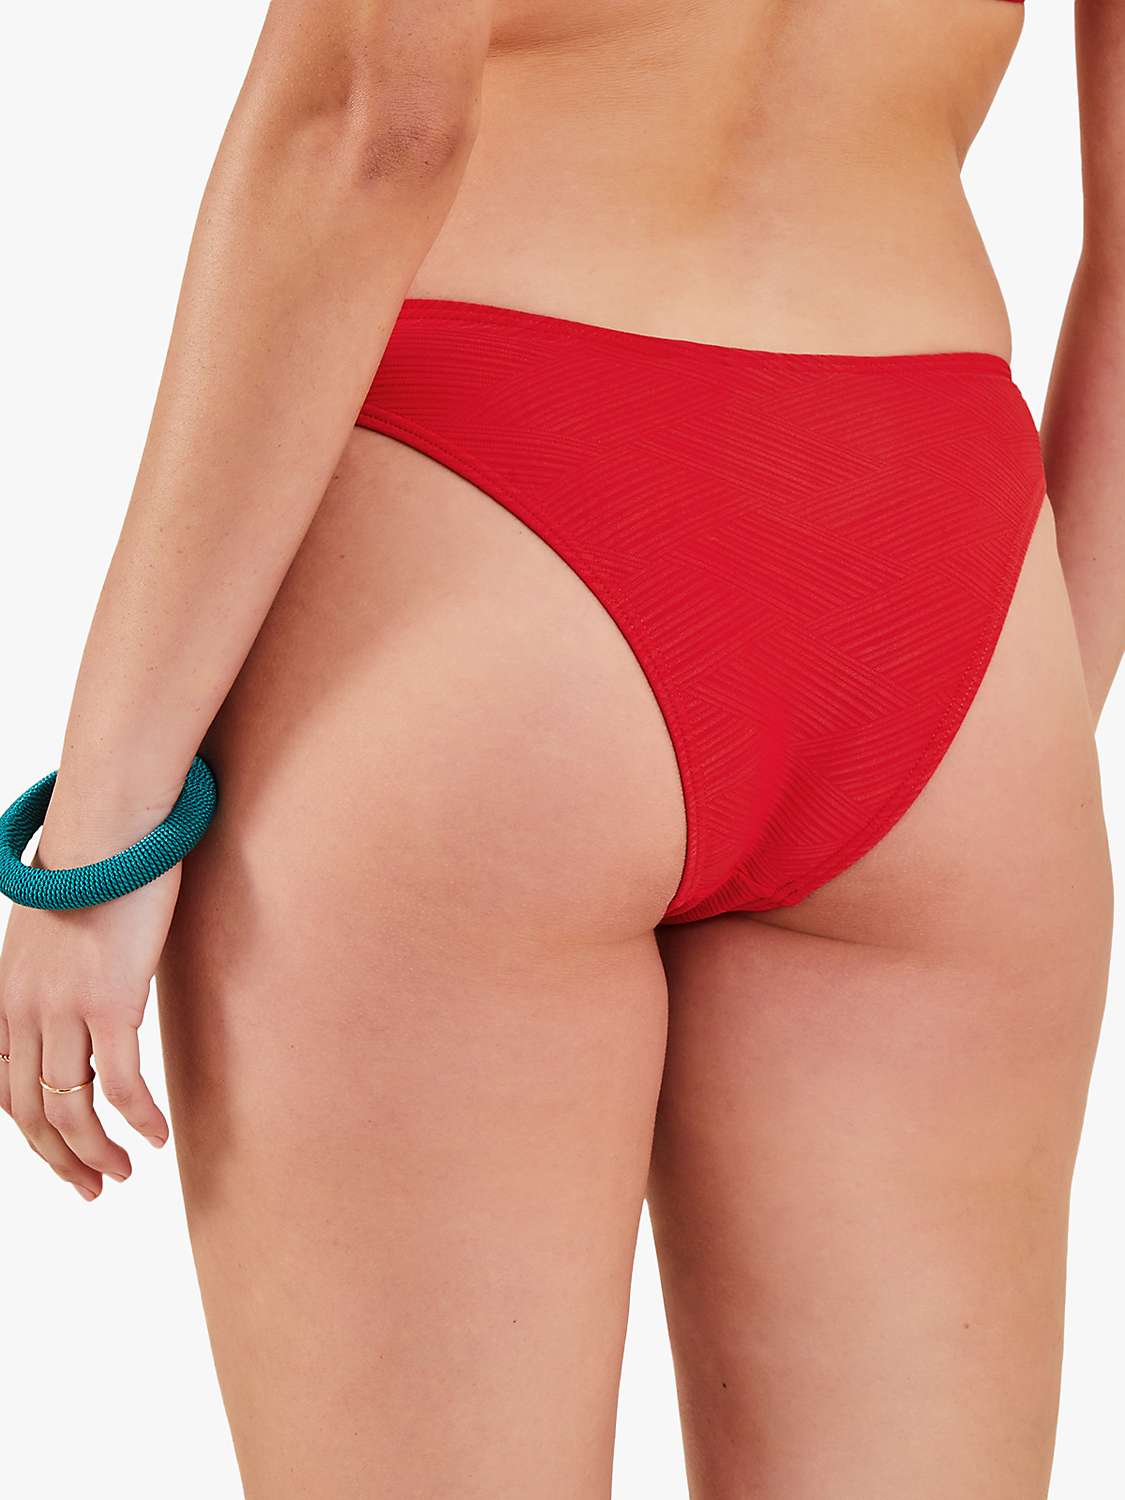 Buy Accessorize Textured Bikini Bottoms, Red Online at johnlewis.com